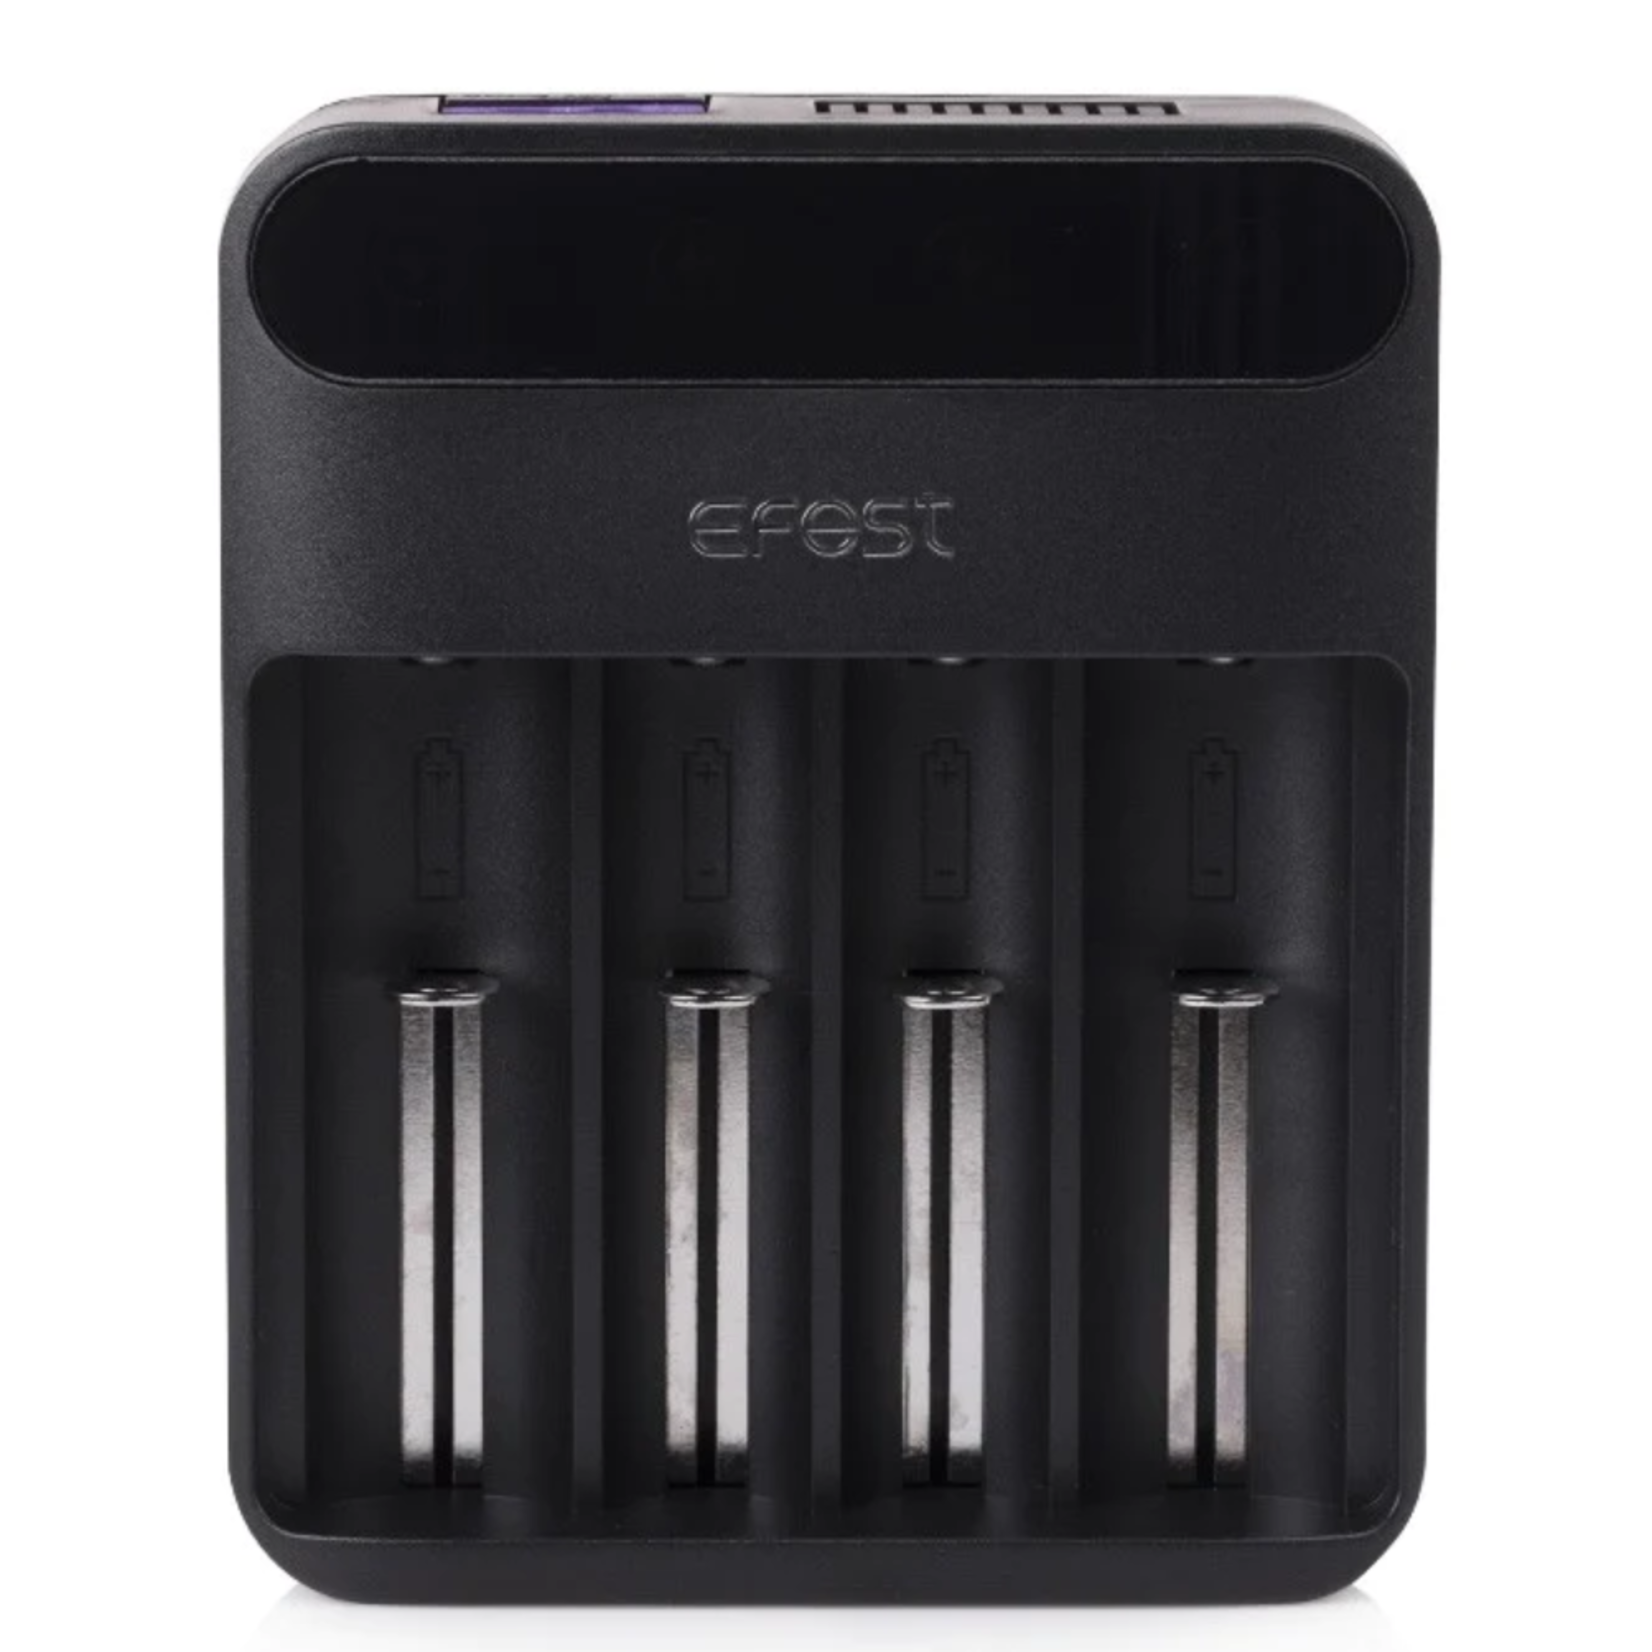 eFest eFest Lush Q4 (Quad) Battery Charger